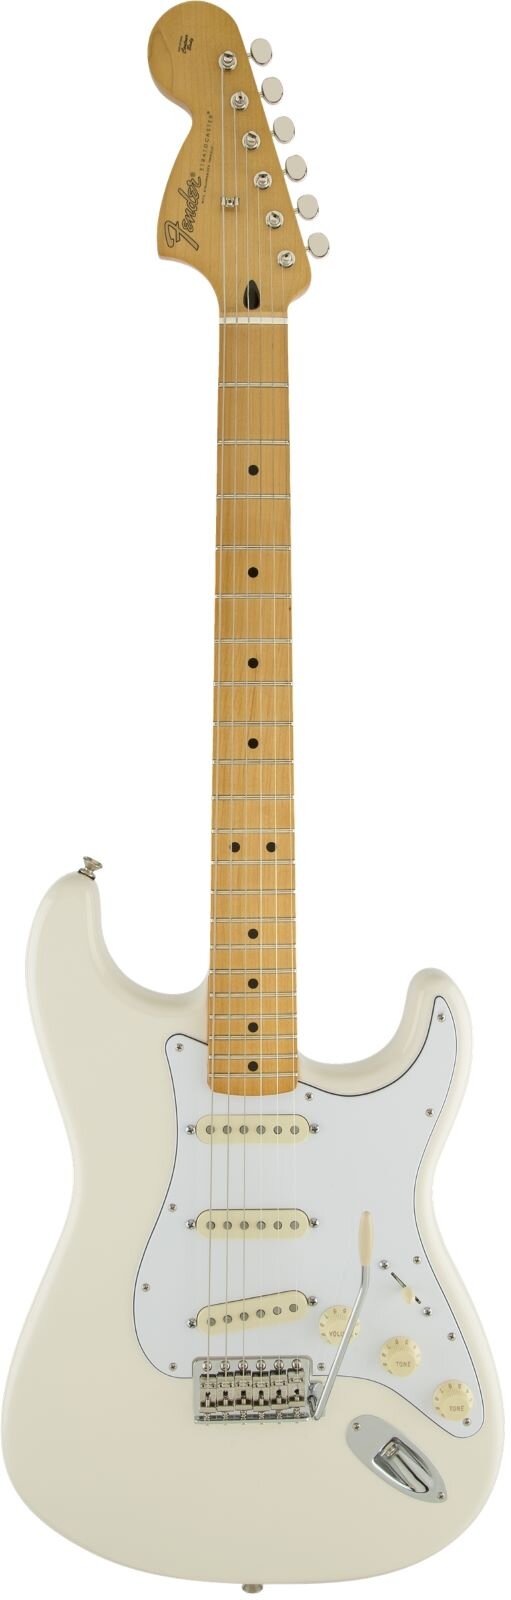 Fender Jimi Hendrix Stratocaster Maple Neck Olympic White : photo 1